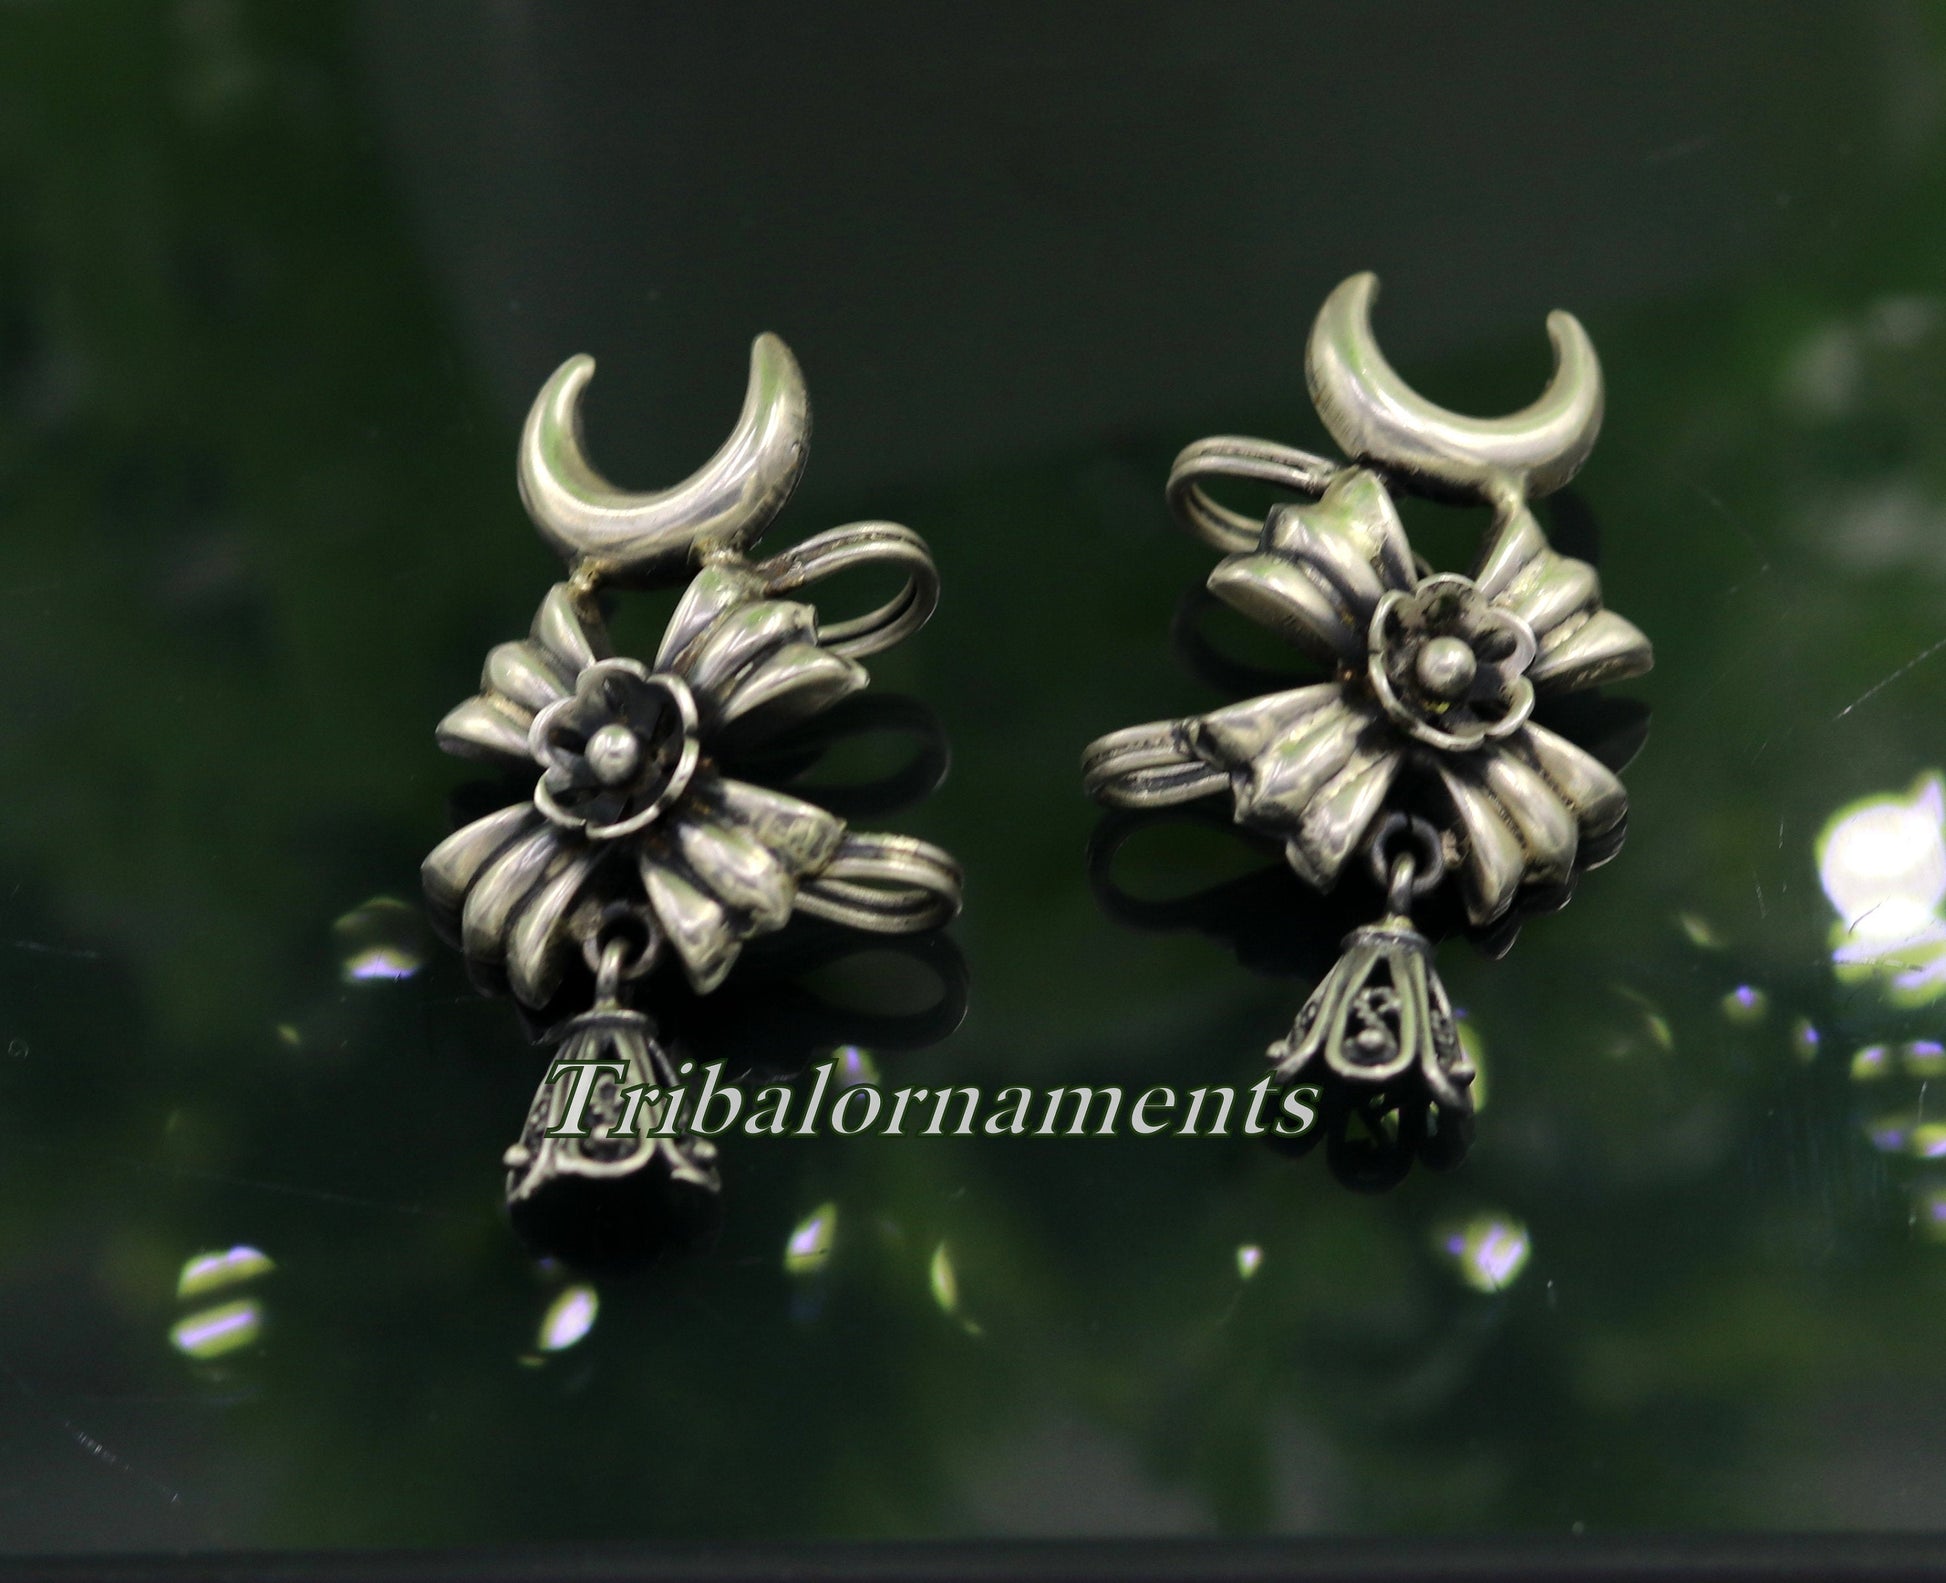 Handcrafted 925 sterling silver Ear cartilage ear plug, Ear clips earring fabulous customized bridesmaid women's upper ear jewelry s840 - TRIBAL ORNAMENTS